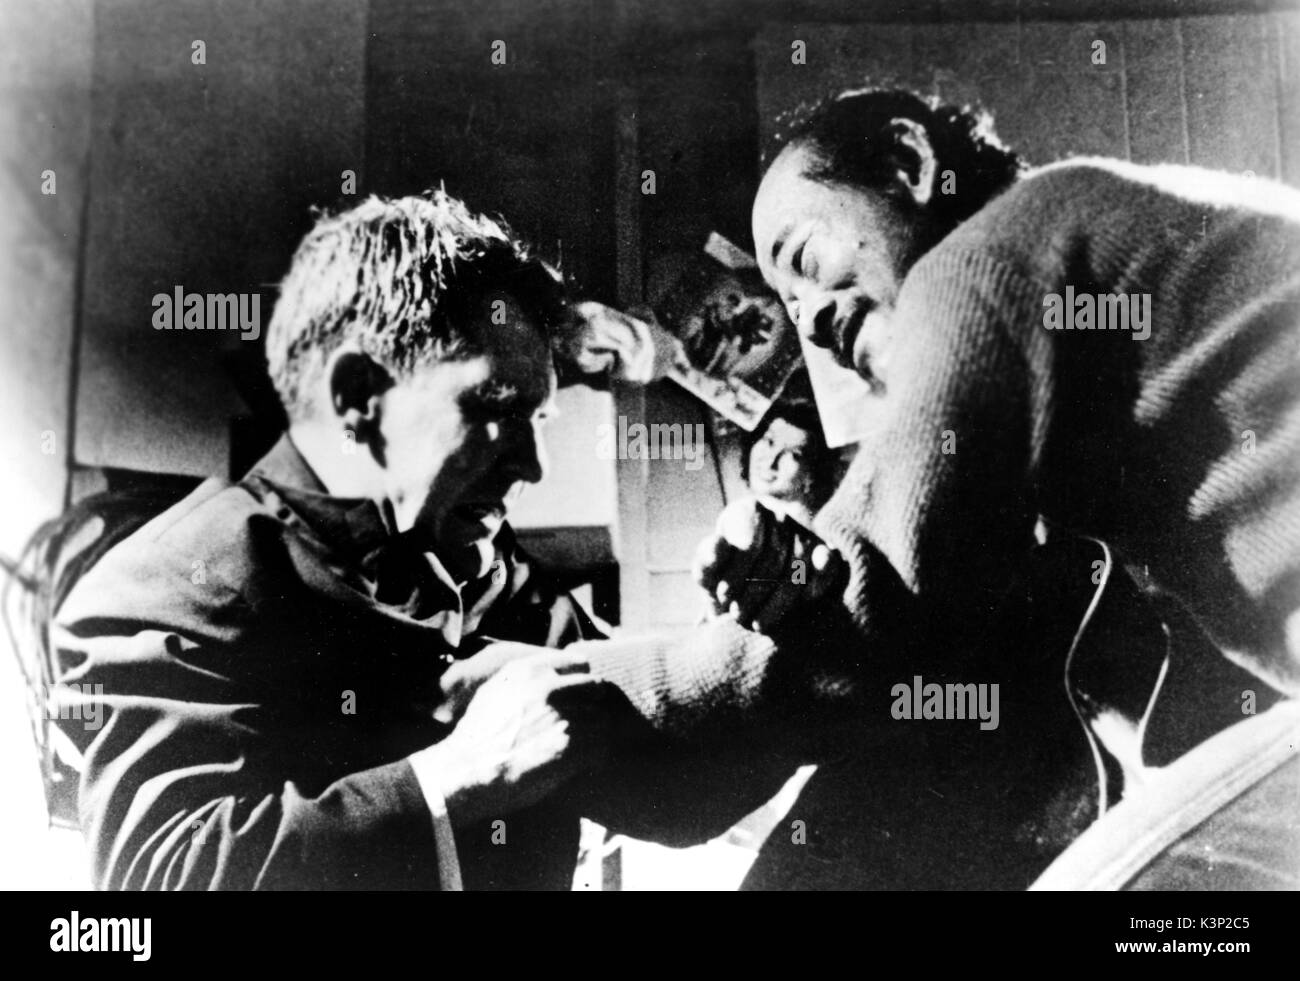 Uomo di corsa [US / PHIL 1958] aka i rapitori Burgess Meredith [sinistra] Data: 1958 Foto Stock